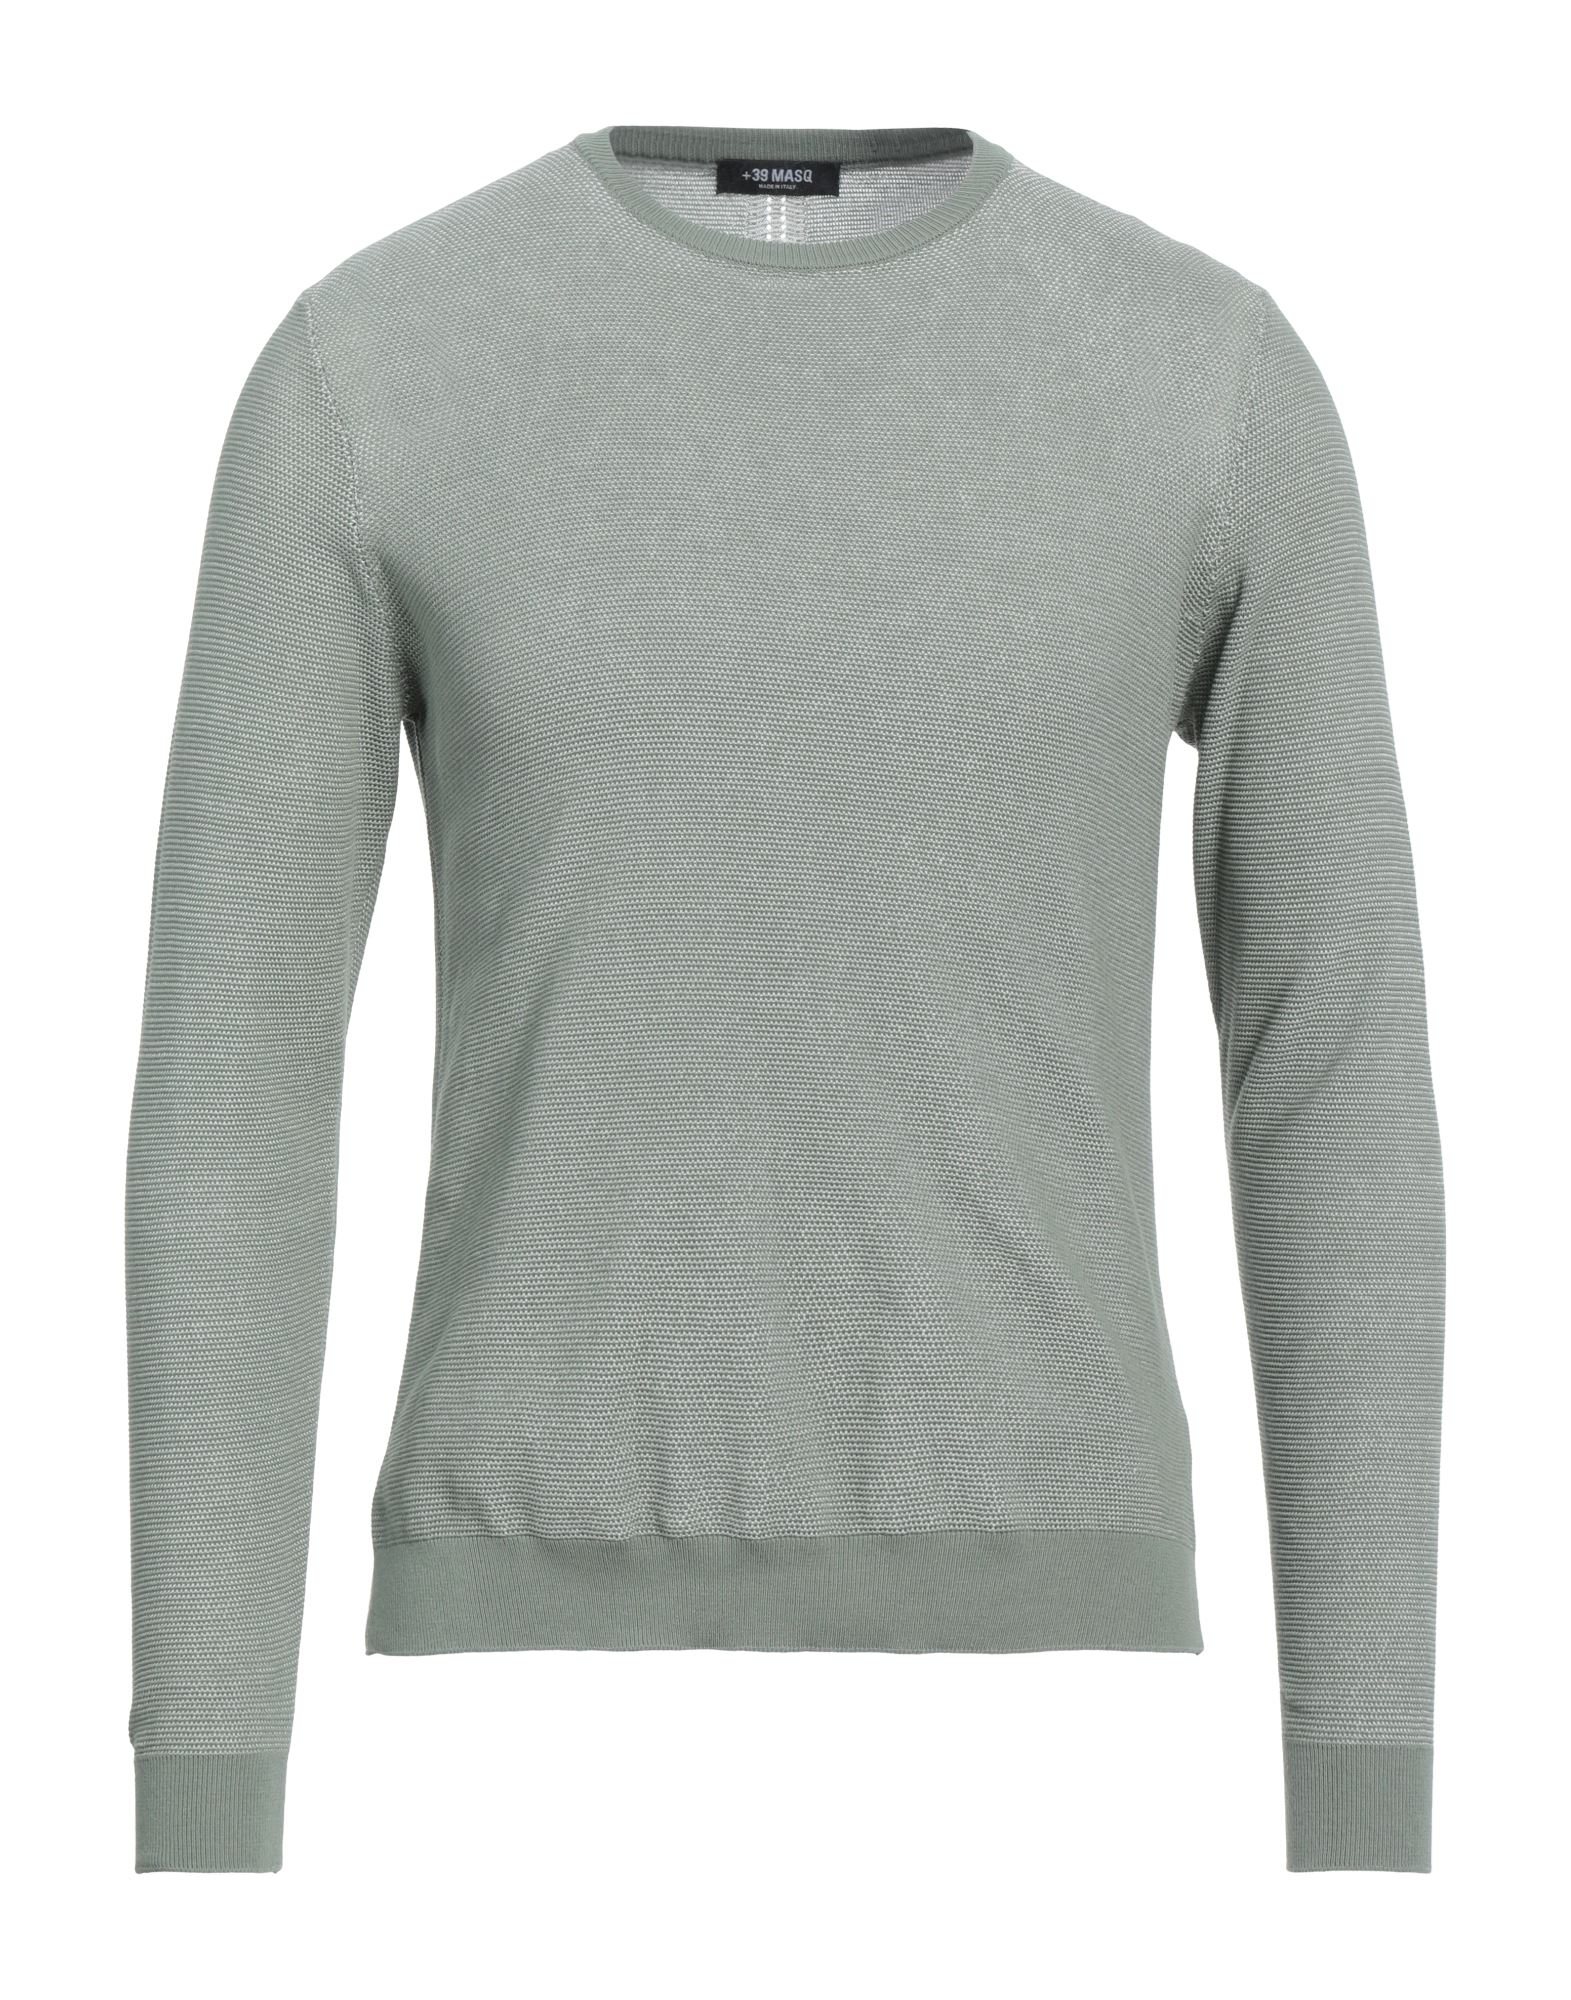 +39 Masq Man Sweater Sage Green Size 3xl Cotton